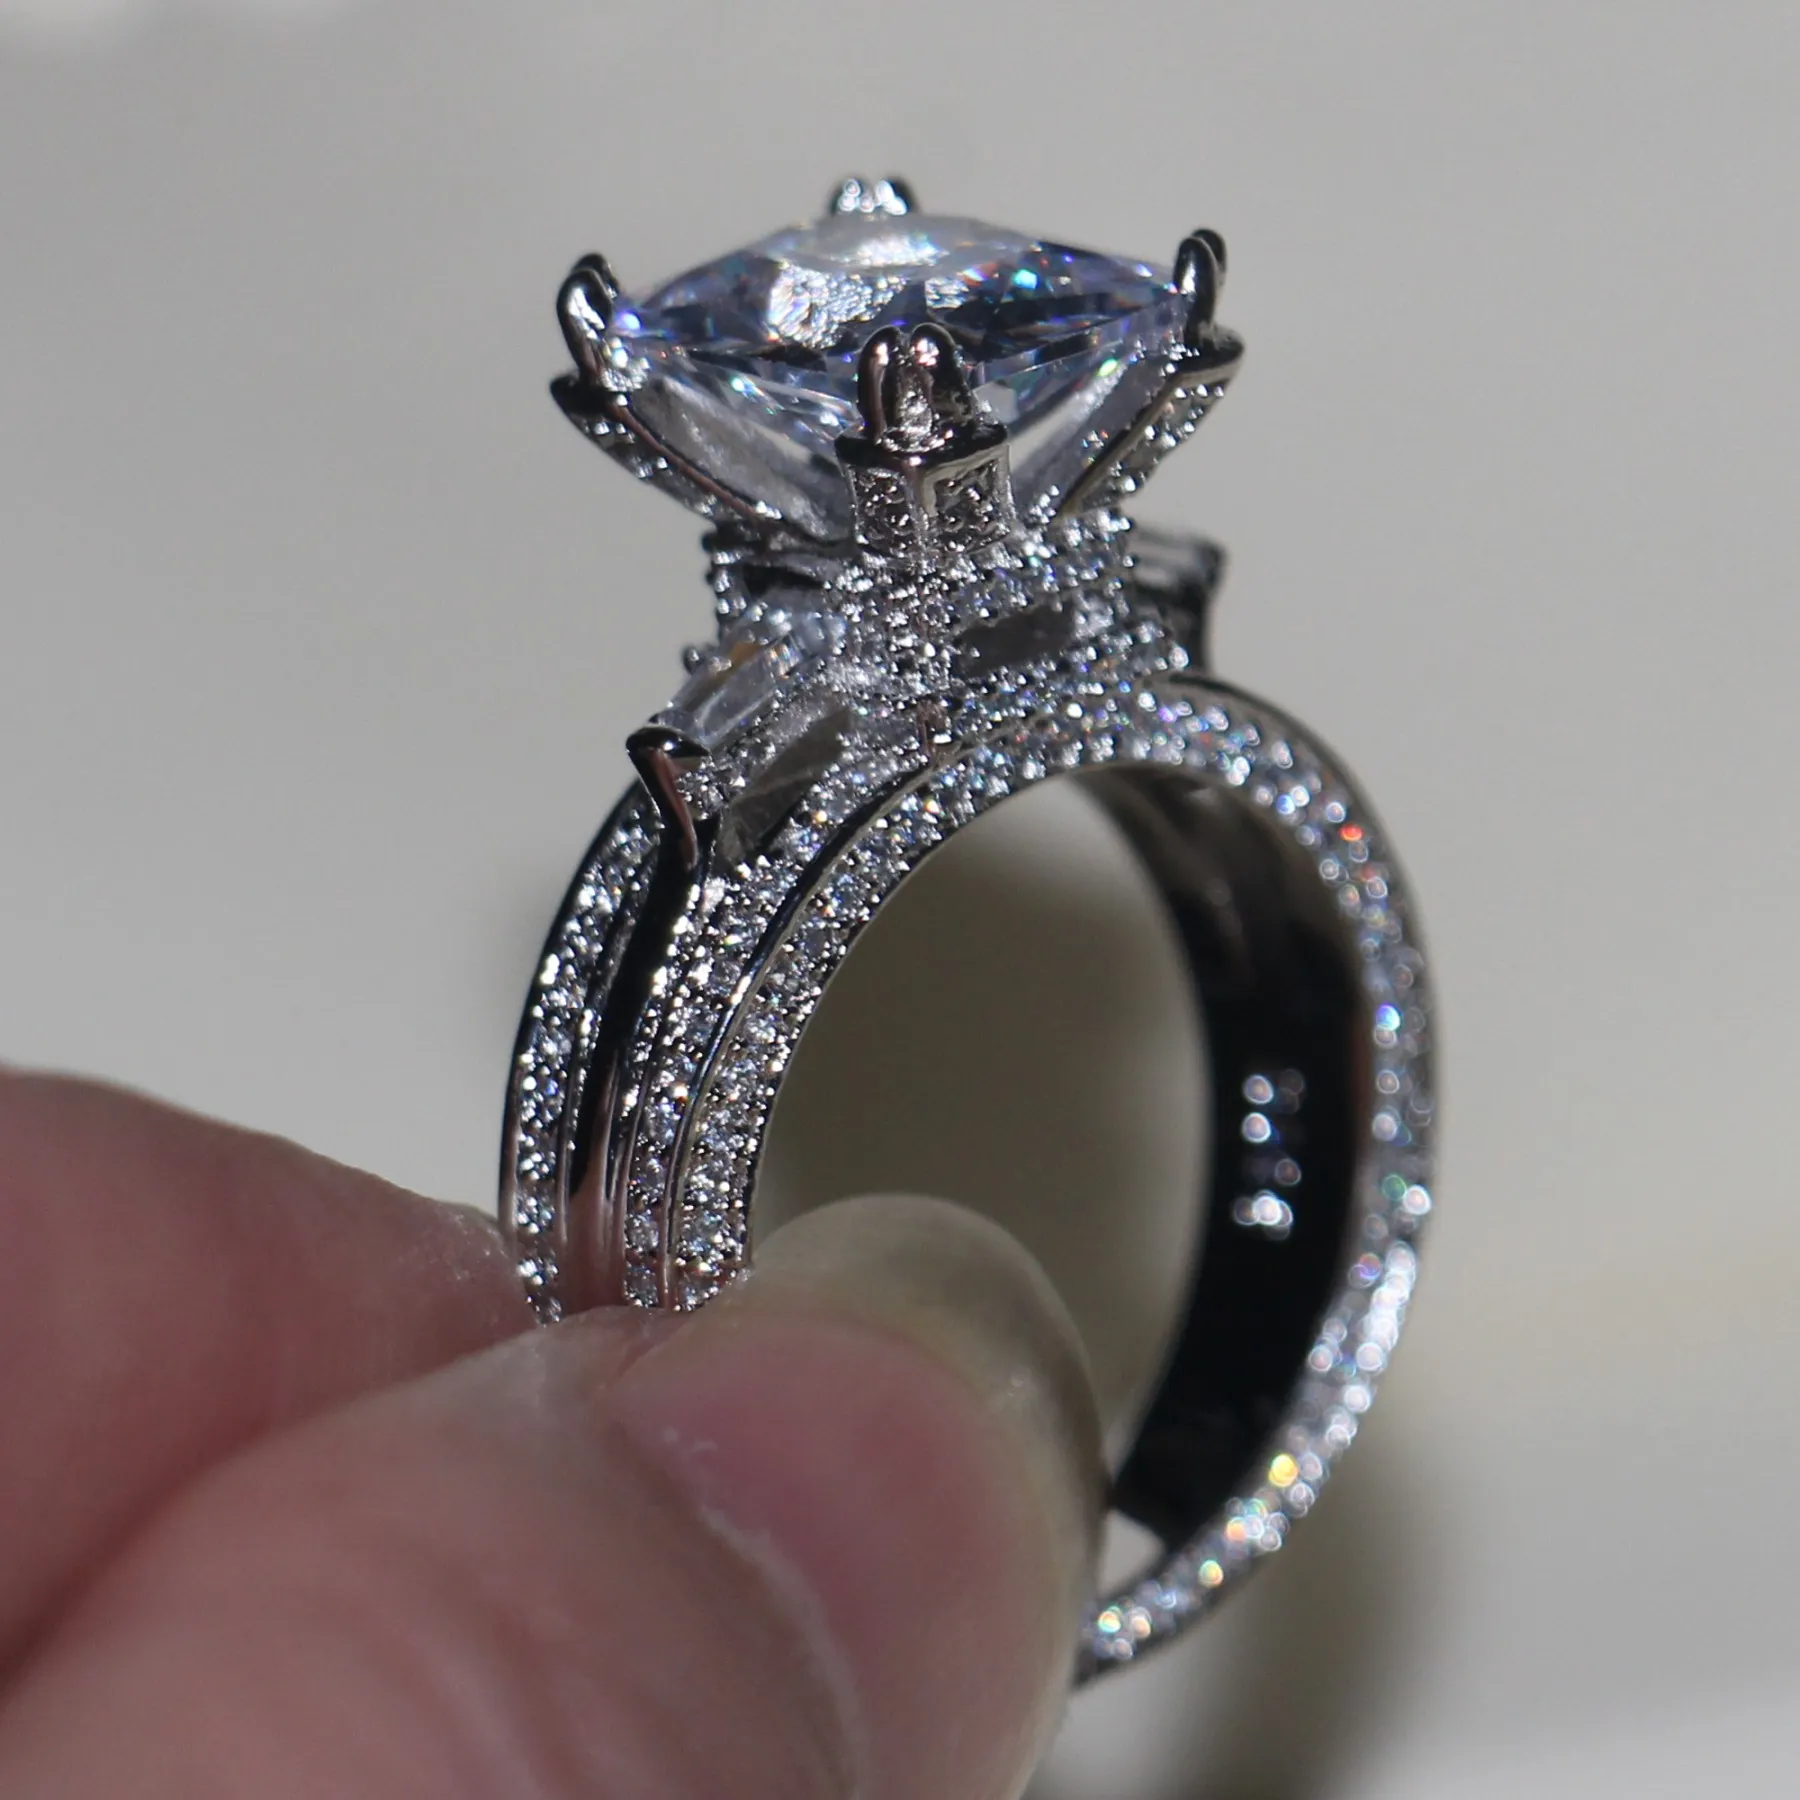 Vecalon Donne Big Jewelry Anello Principessa Taglio 10CT Diamond Pietra CZ 925 Sterling Sterling Engagement Wedding Ring Regalo